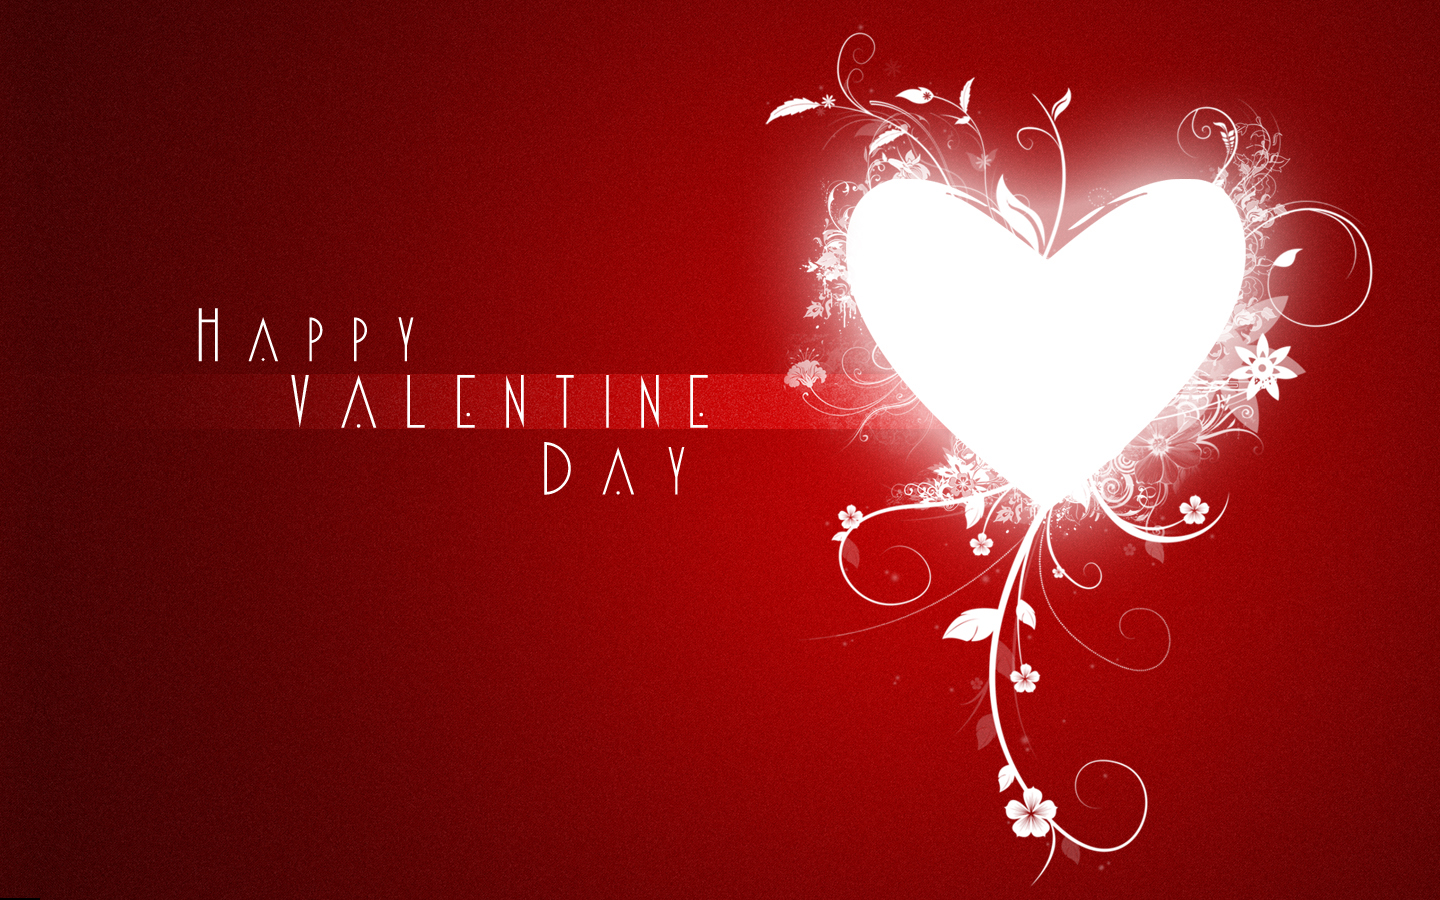 valentines day wallpaper,heart,love,valentine's day,red,text